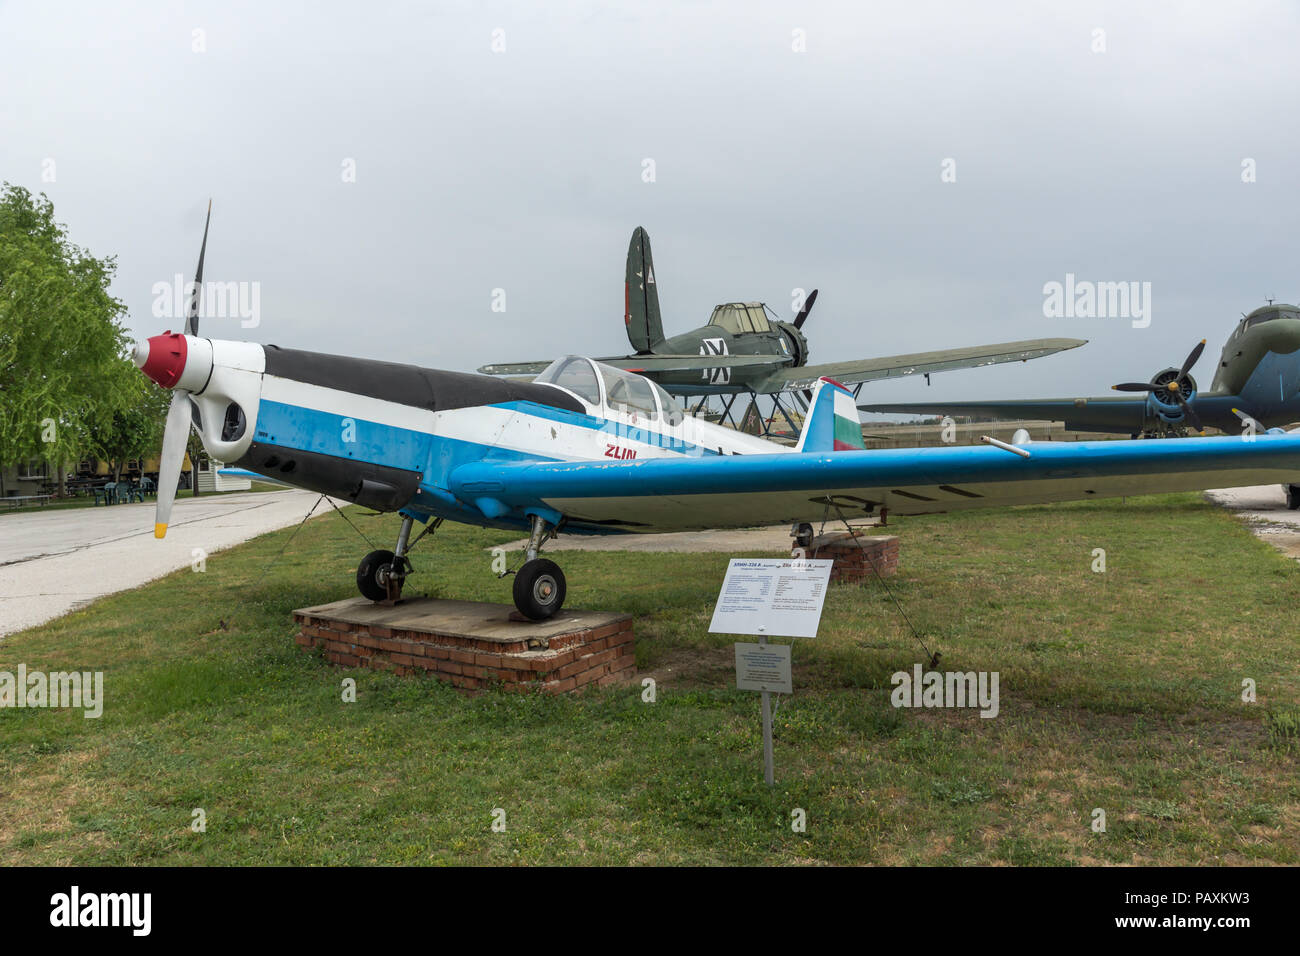 KRUMOVO, PLOVDIV, BULGARIA - 29 APRIL 2017: Plane Z-326A in Aviation Museum near Plovdiv Airport, Bulgaria Stock Photo